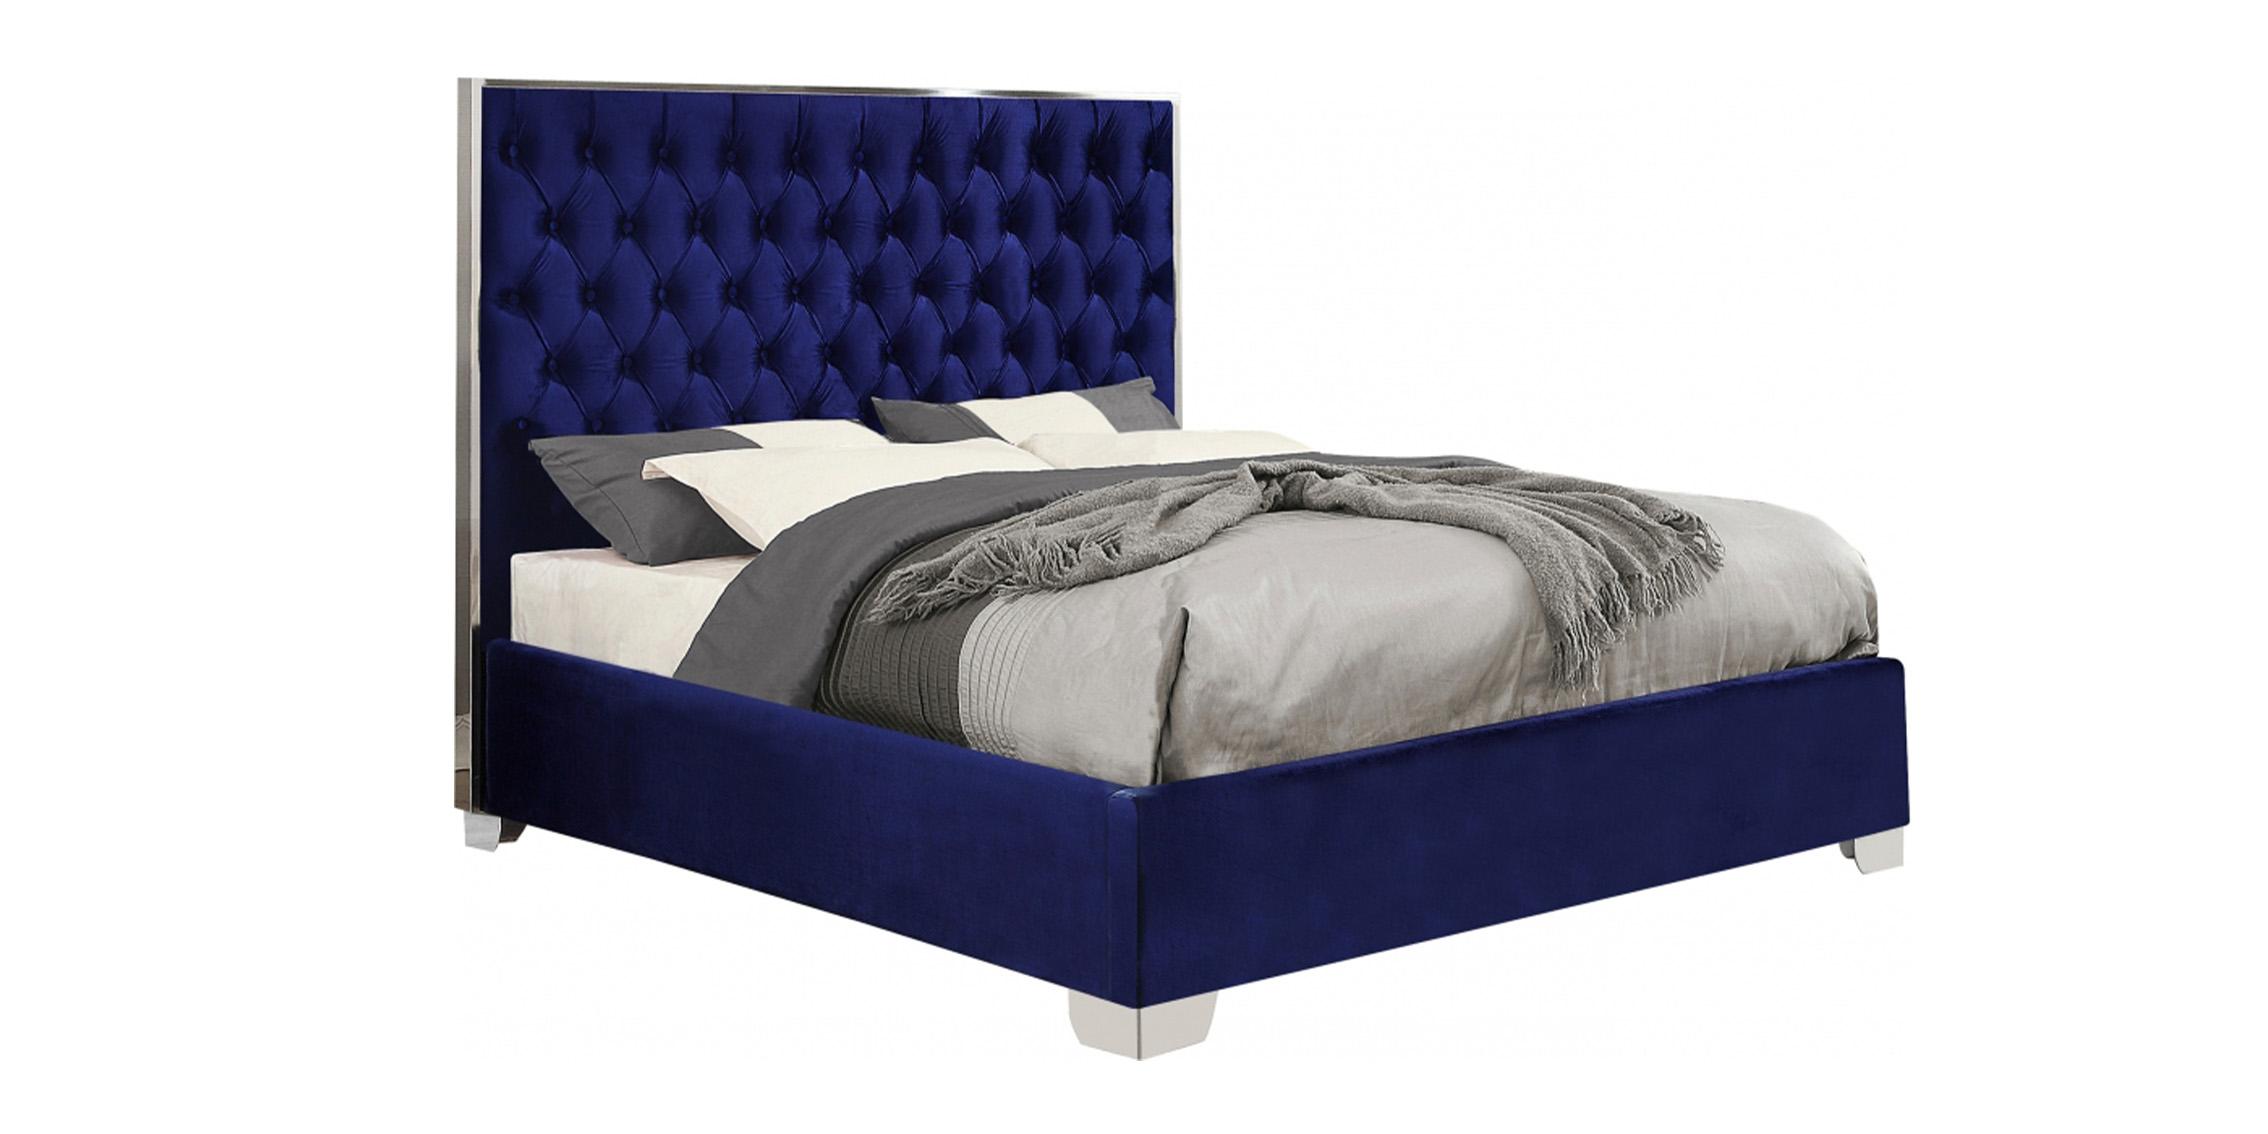 

    
Meridian Furniture LexiNavy-Q Platform Bed Navy blue LexiNavy-Q
